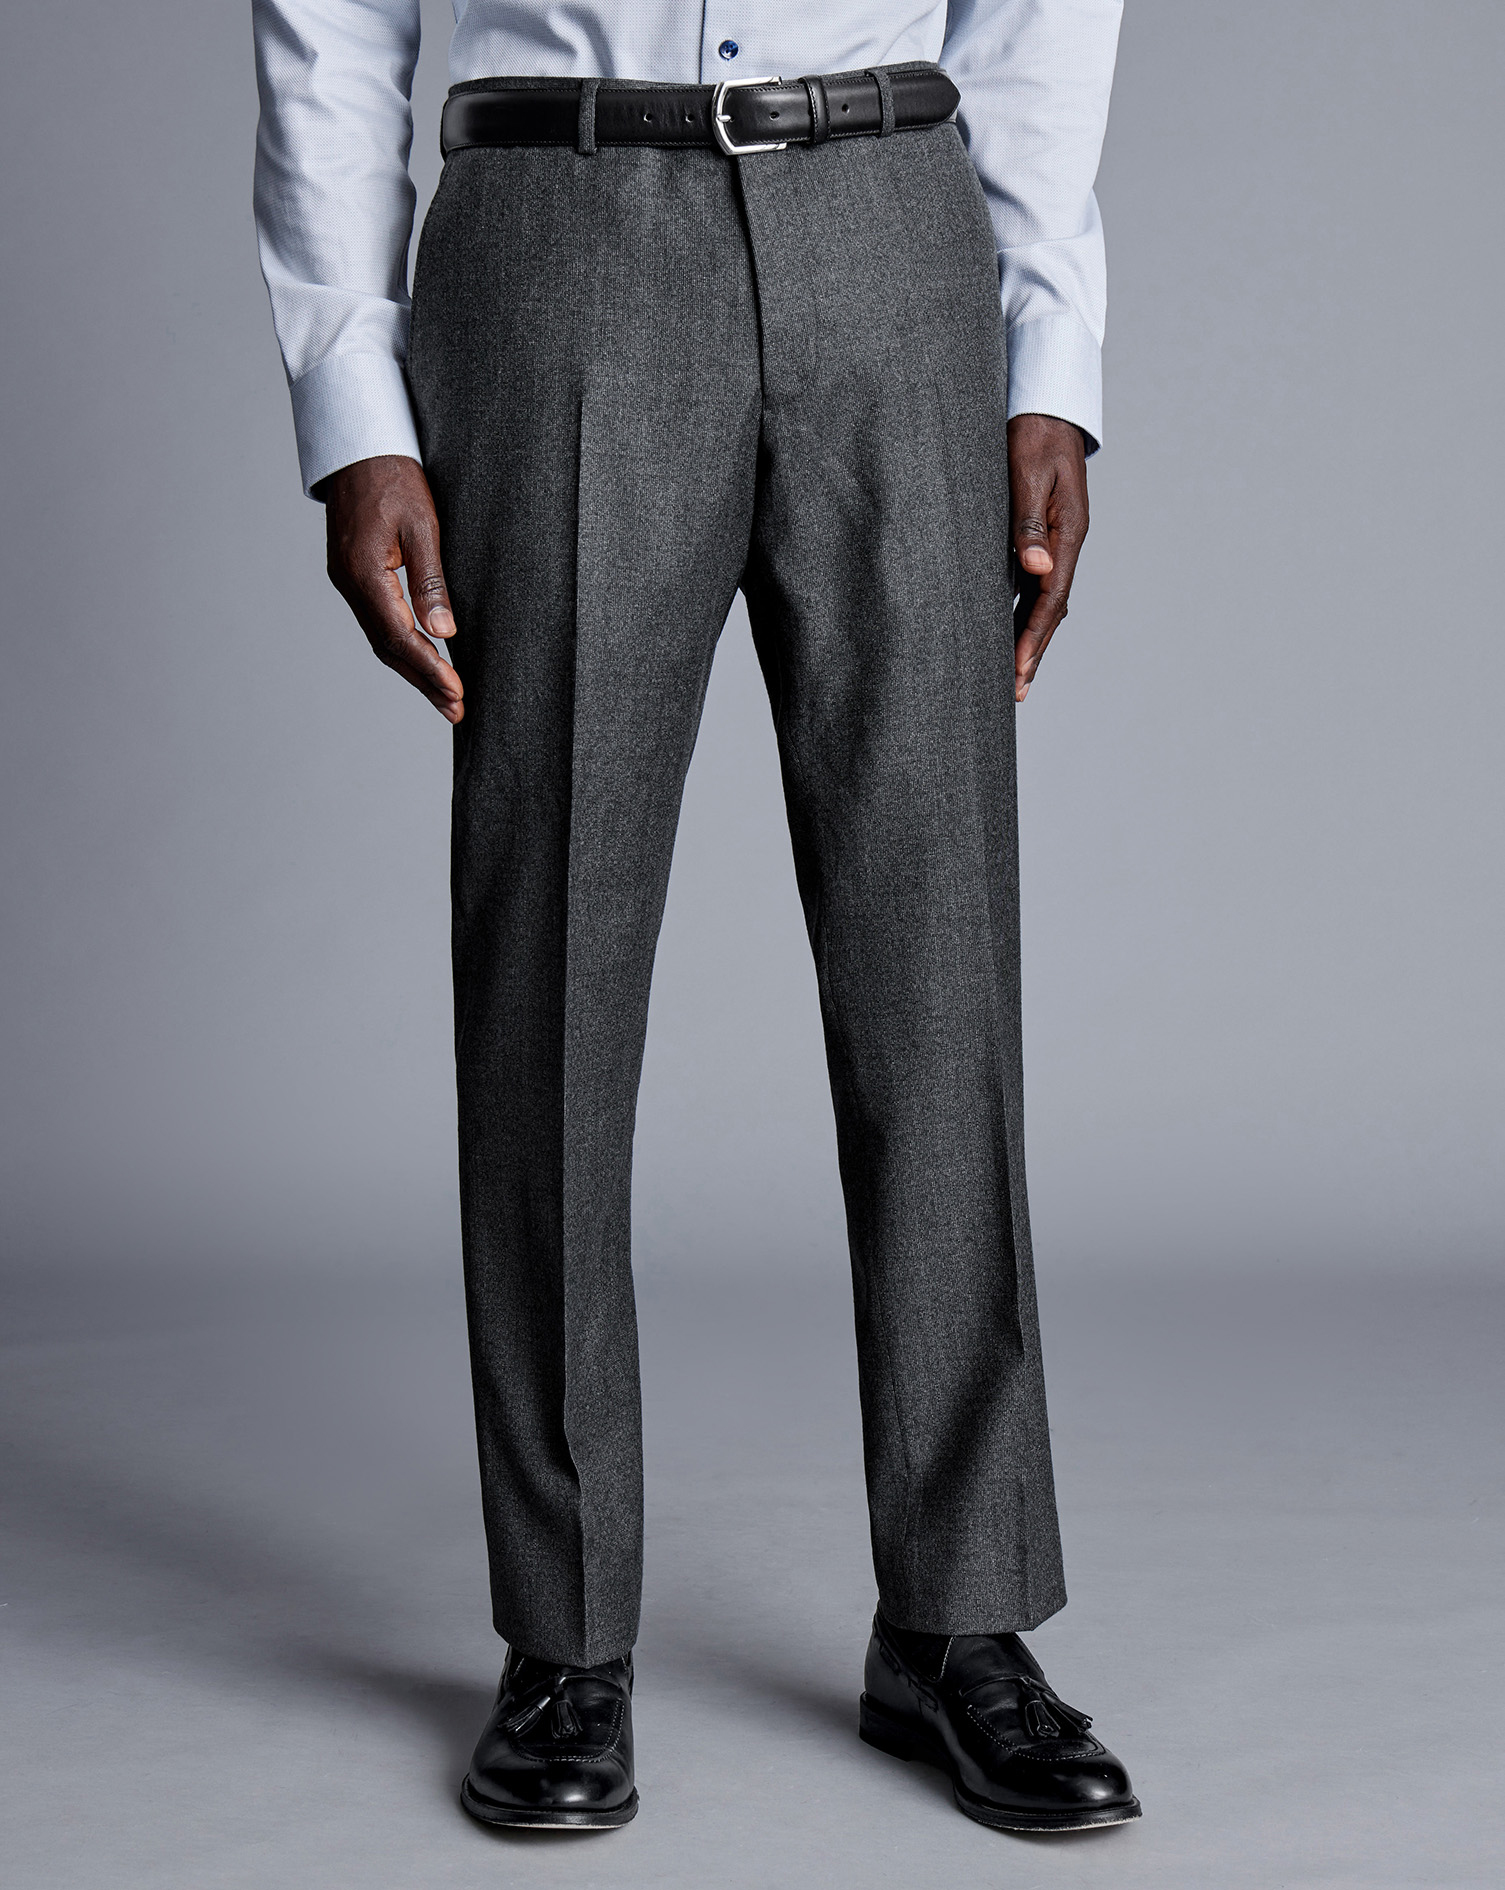 Men's Charles Tyrwhitt Italian Pindot Suit Trousers - Grey Size 36/32 Wool
